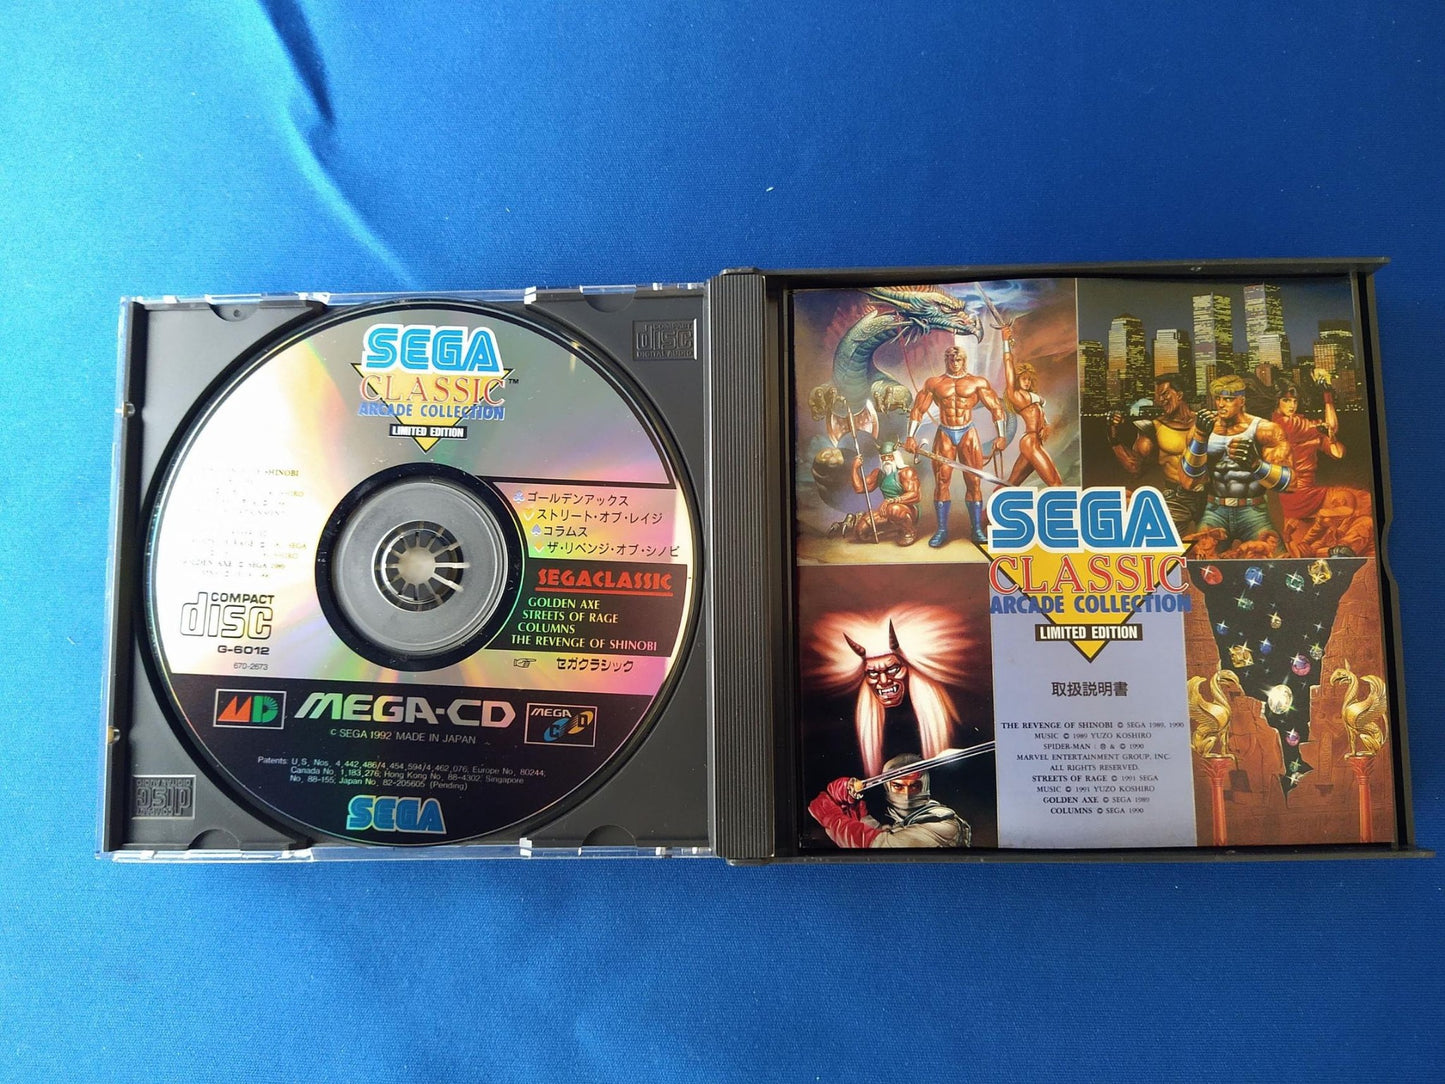 SEGA CLASSIC Arcade Collection MEGA CD shooter game Disk, Manual, Box set-f0524-